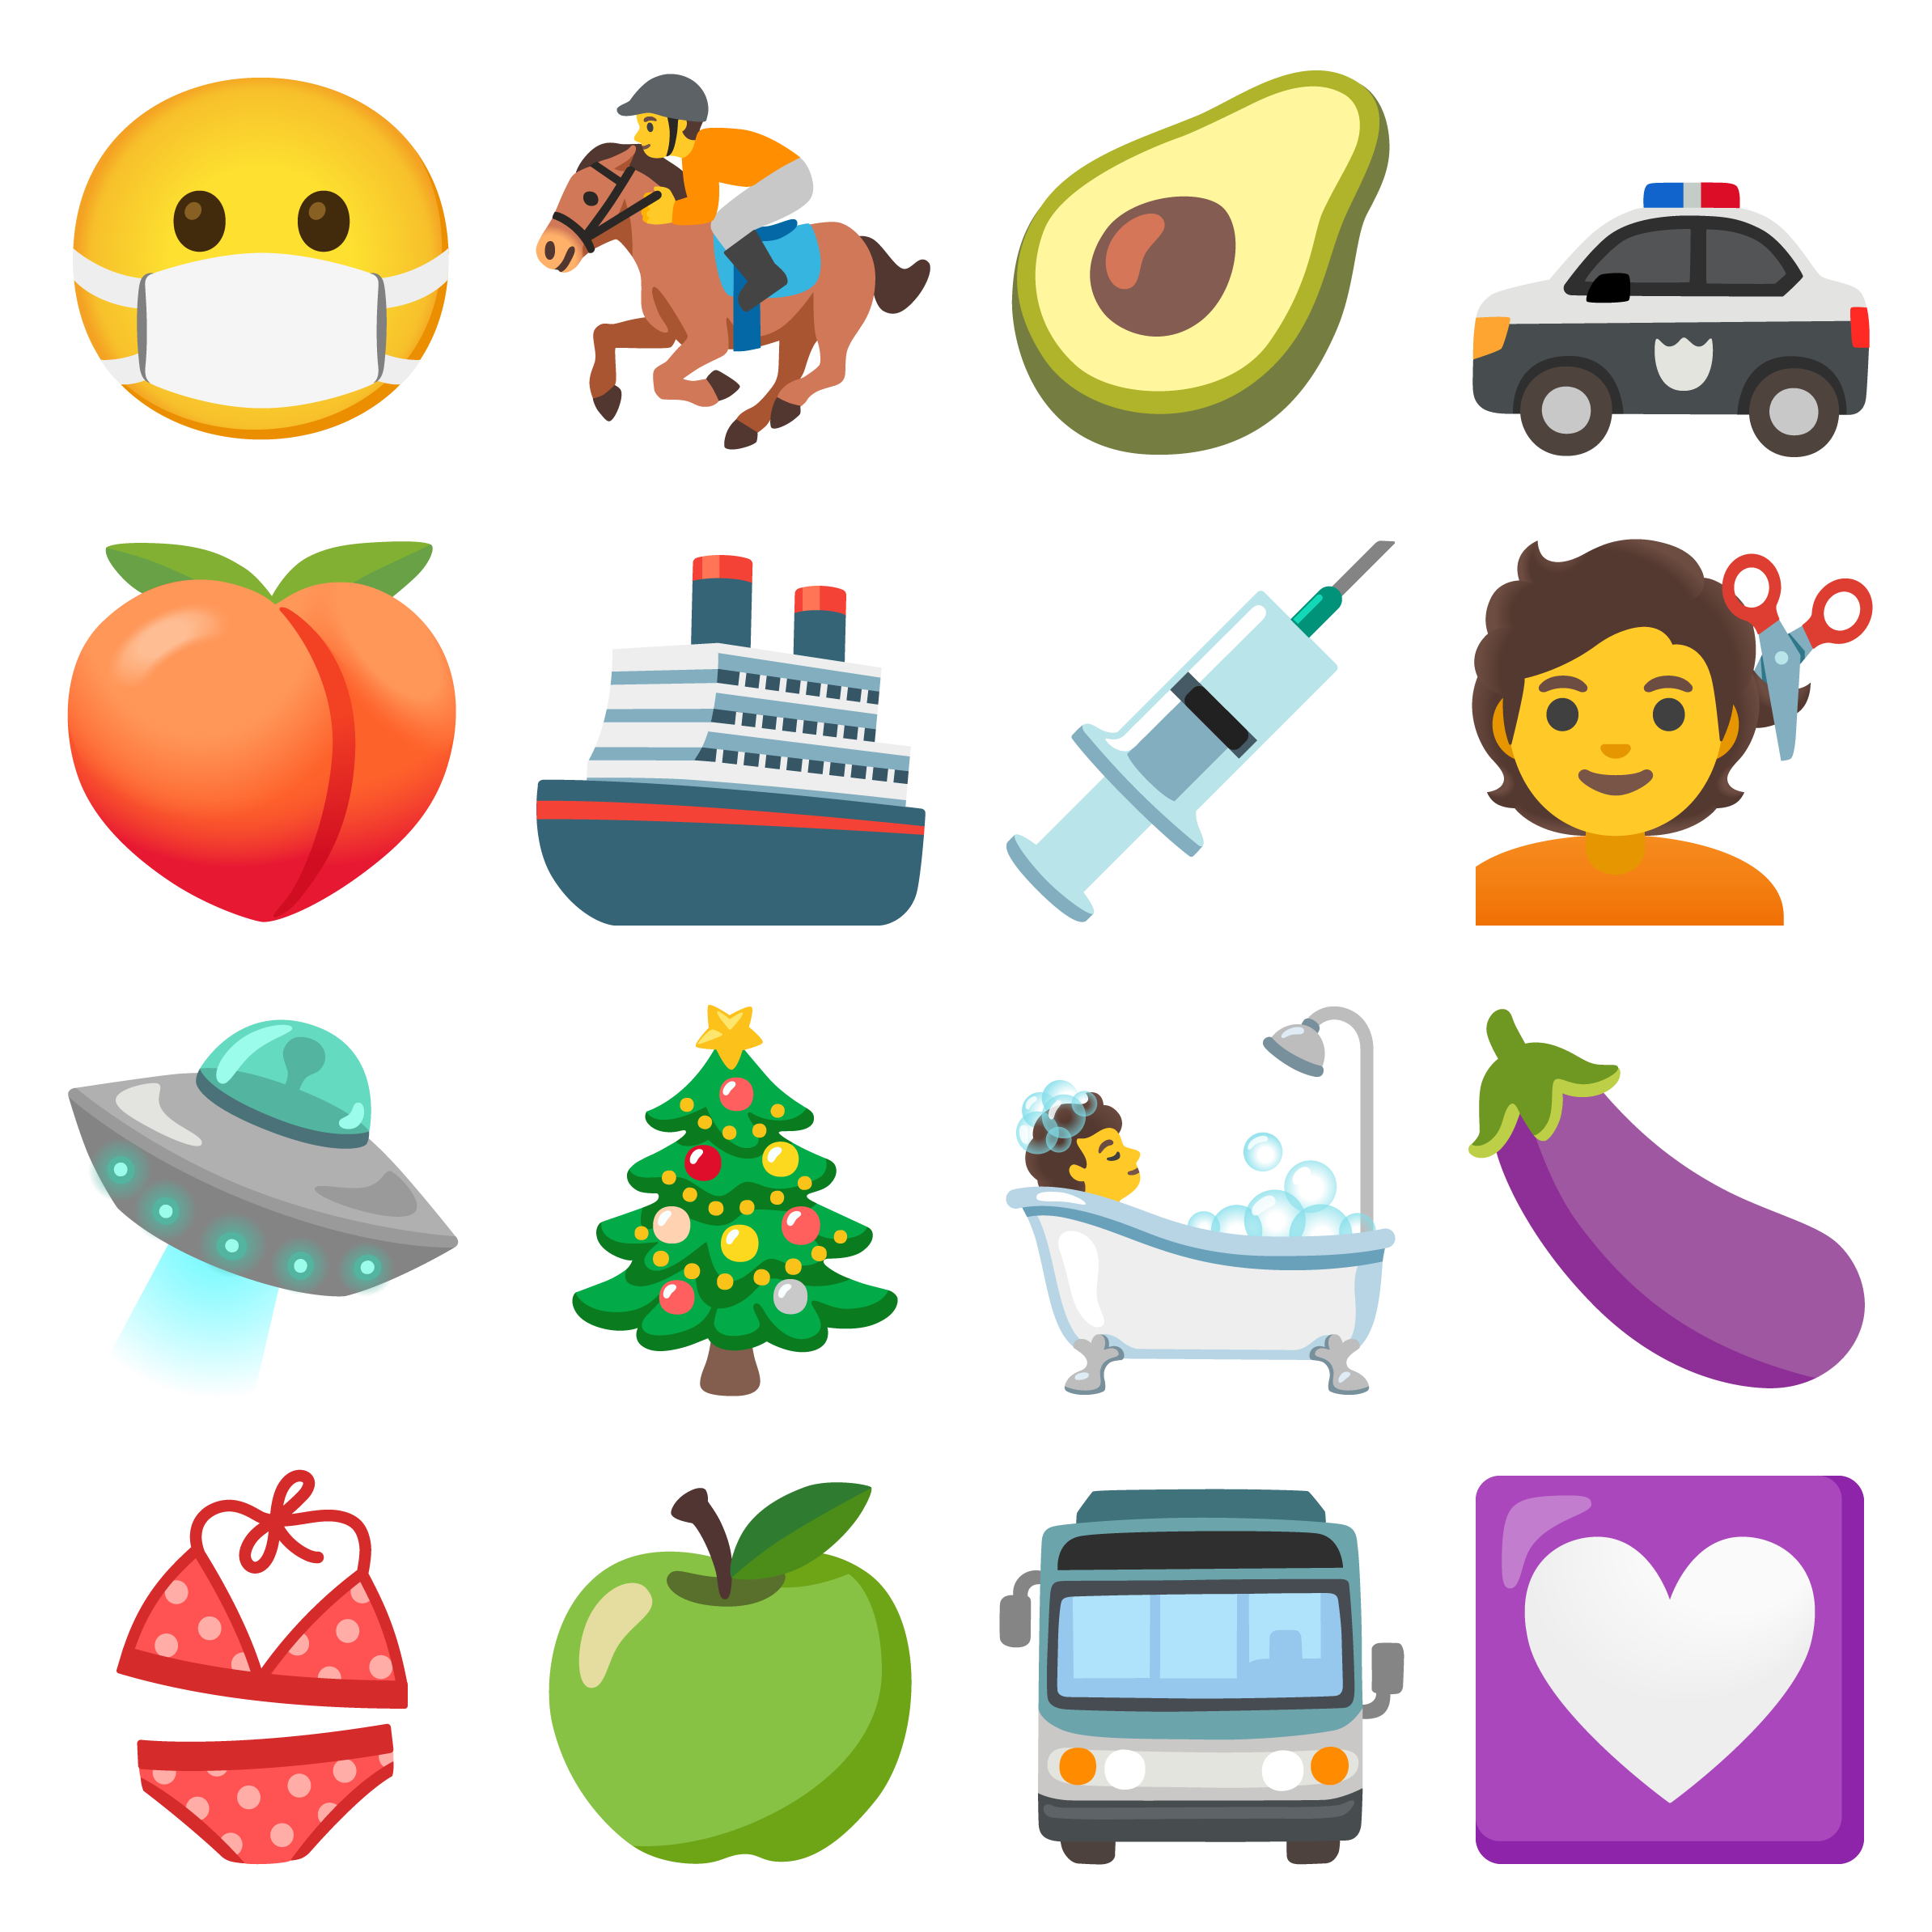 New Android 12 emoji